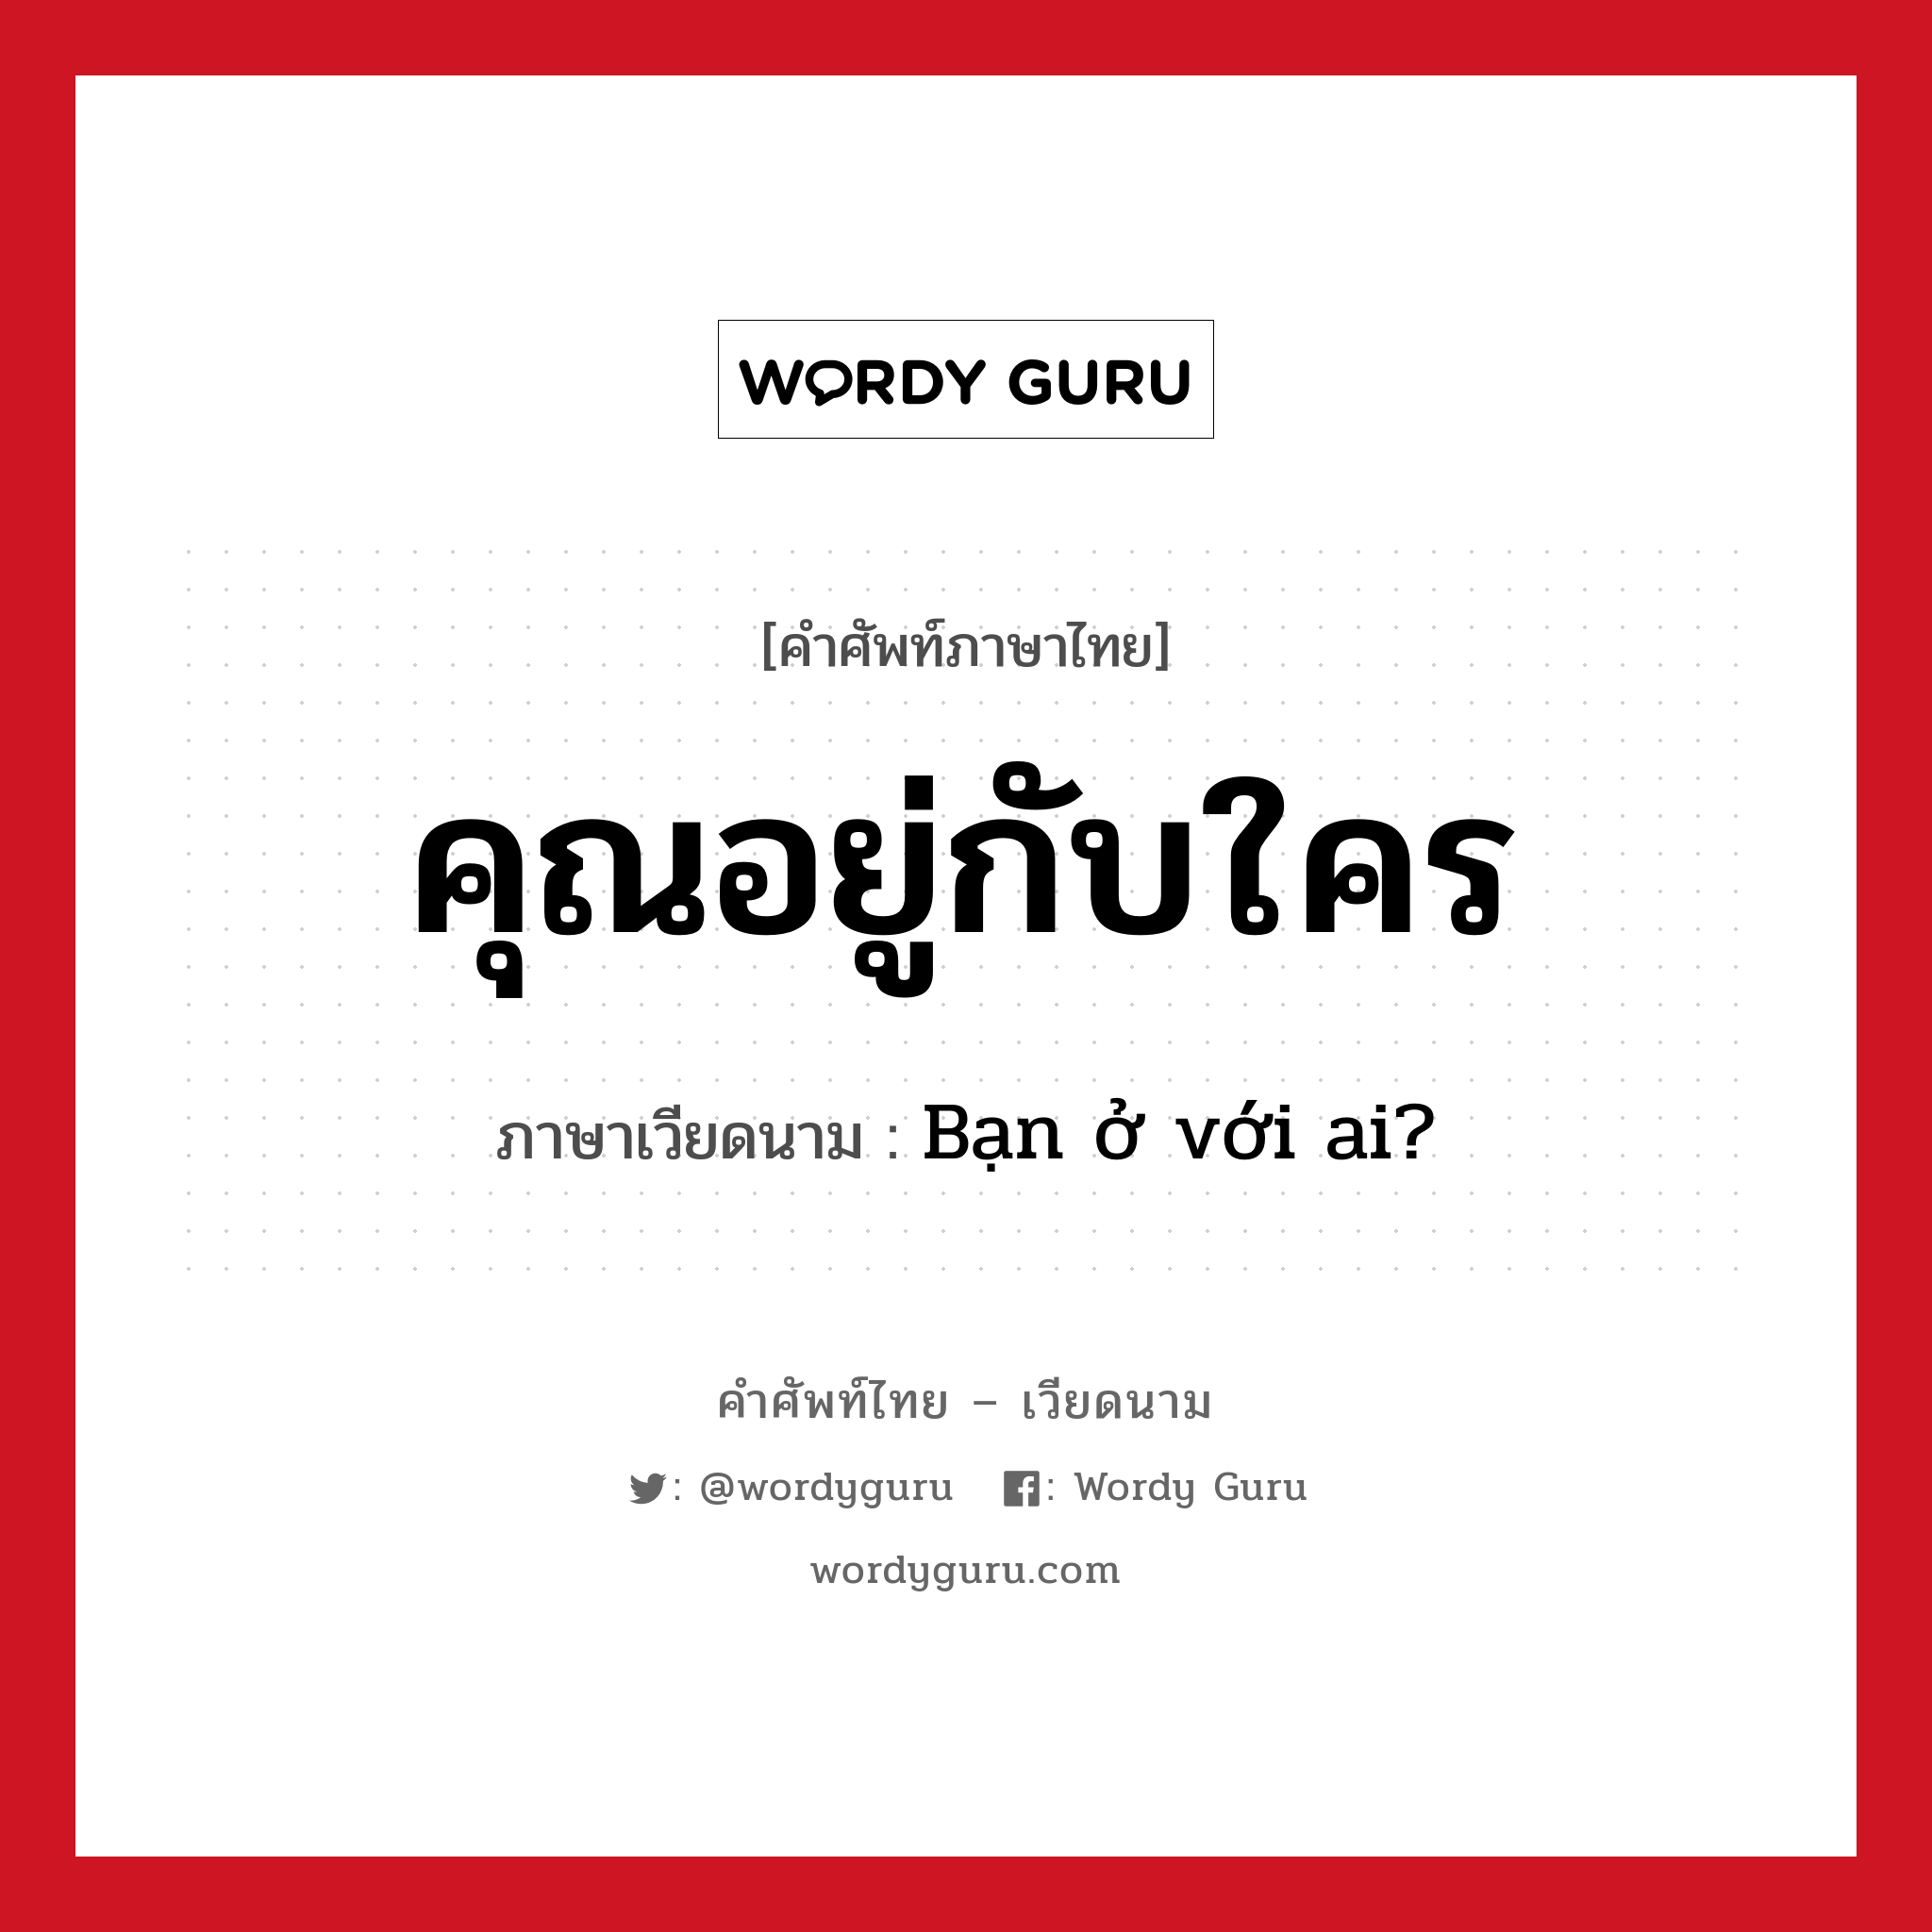 Bạn ở với ai? ภาษาไทย?, คำศัพท์ภาษาไทย - เวียดนาม Bạn ở với ai? ภาษาเวียดนาม คุณอยู่กับใคร หมวด เครือญาติ หมวด เครือญาติ